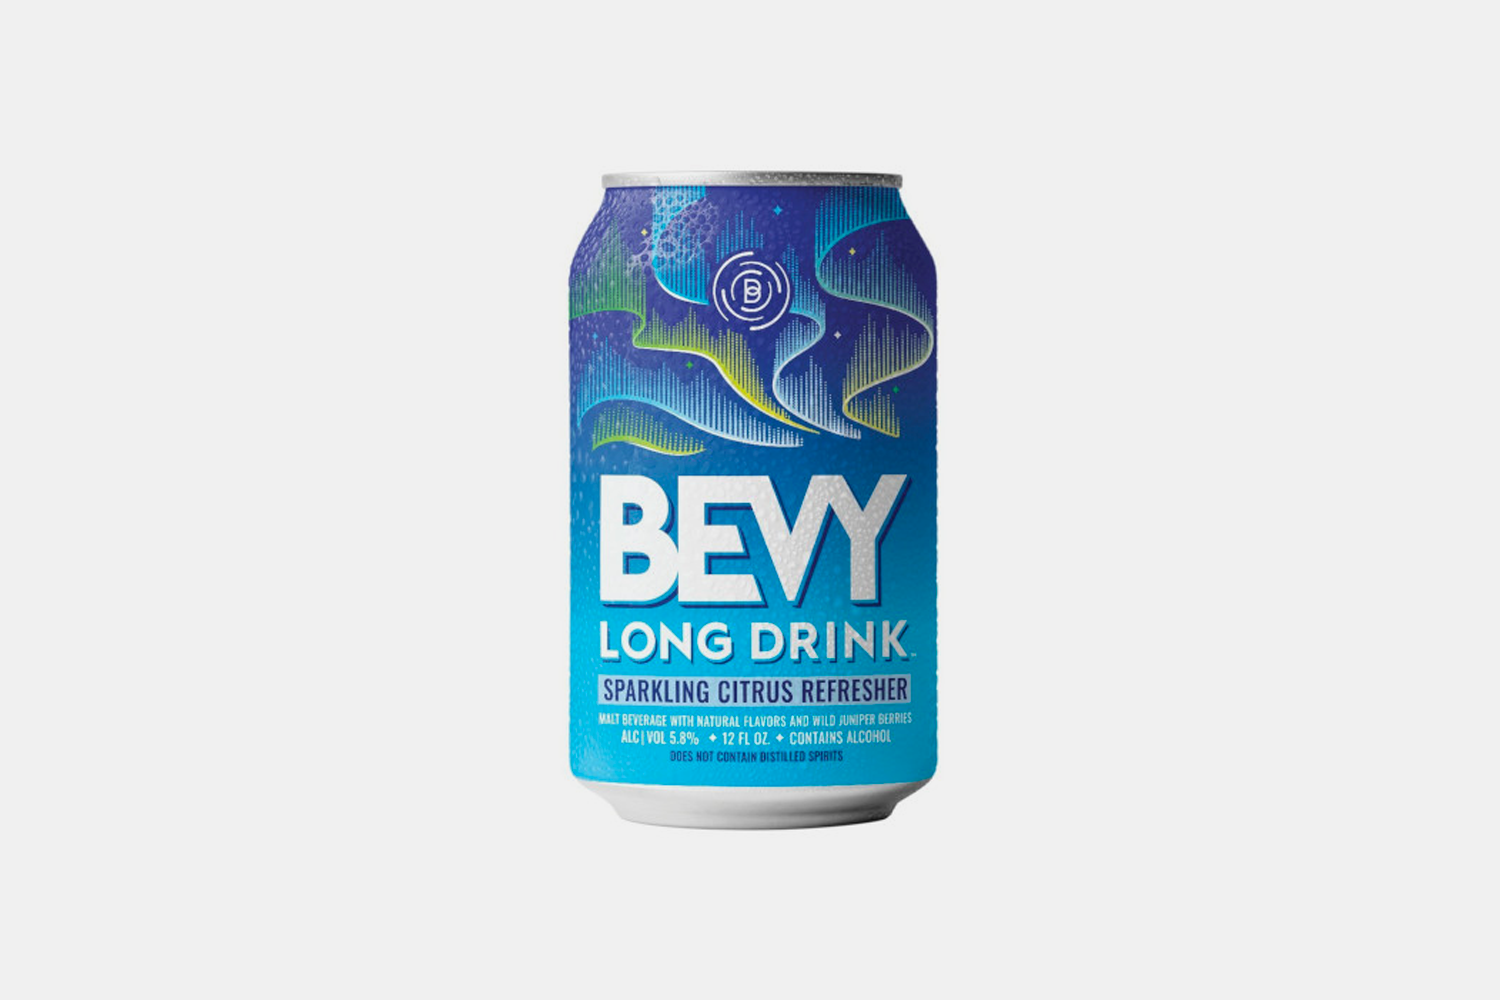 Bevy long drink